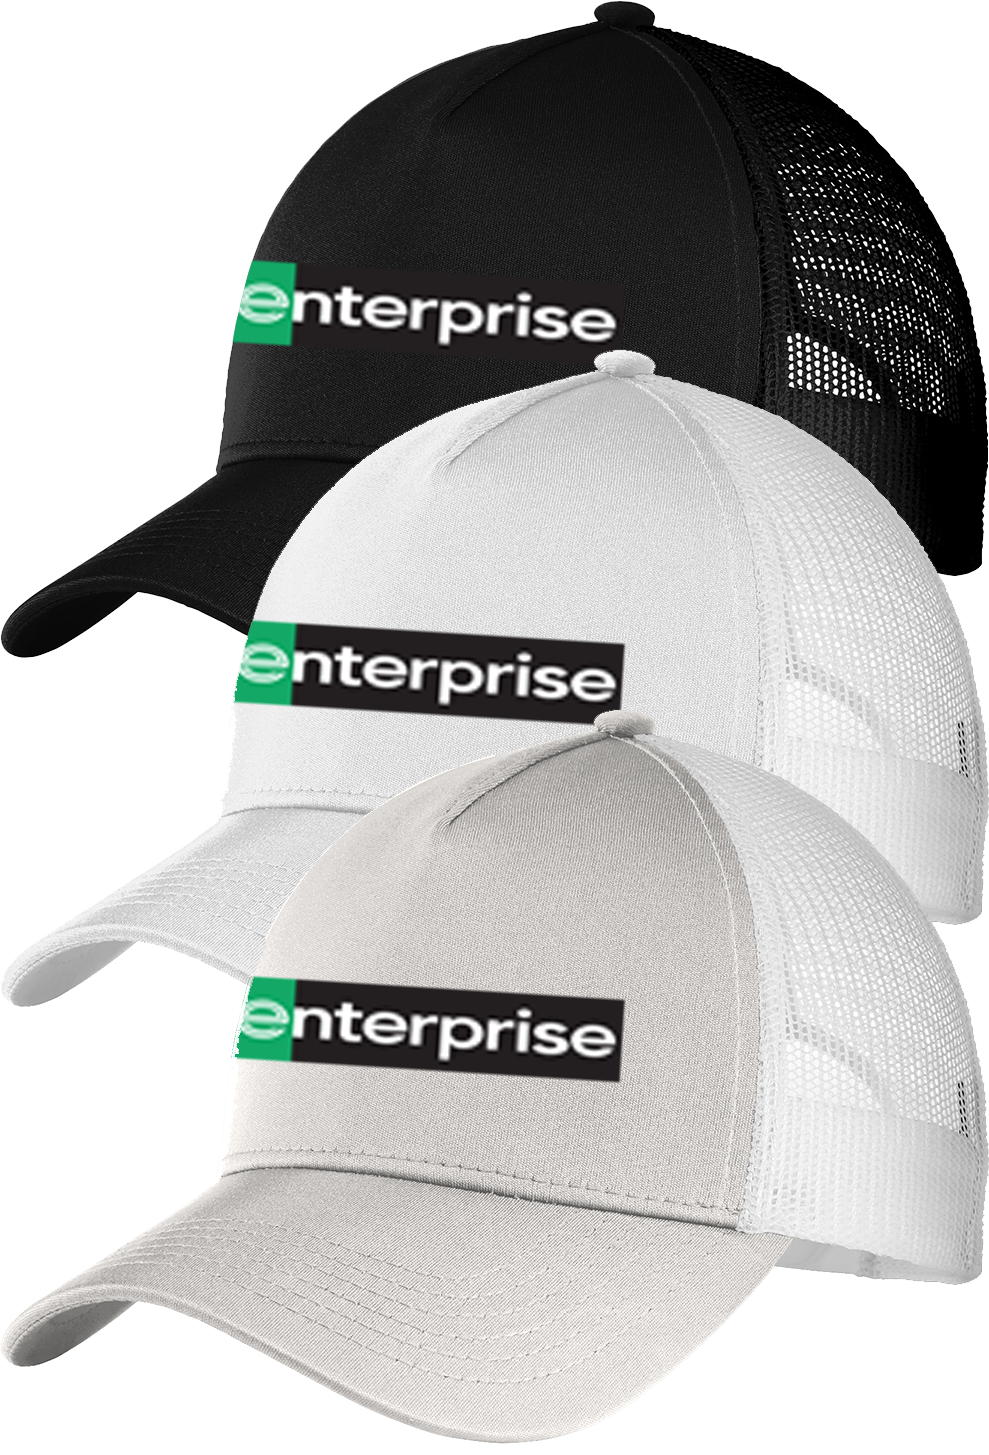 Enterprise Mesh Back Cap 